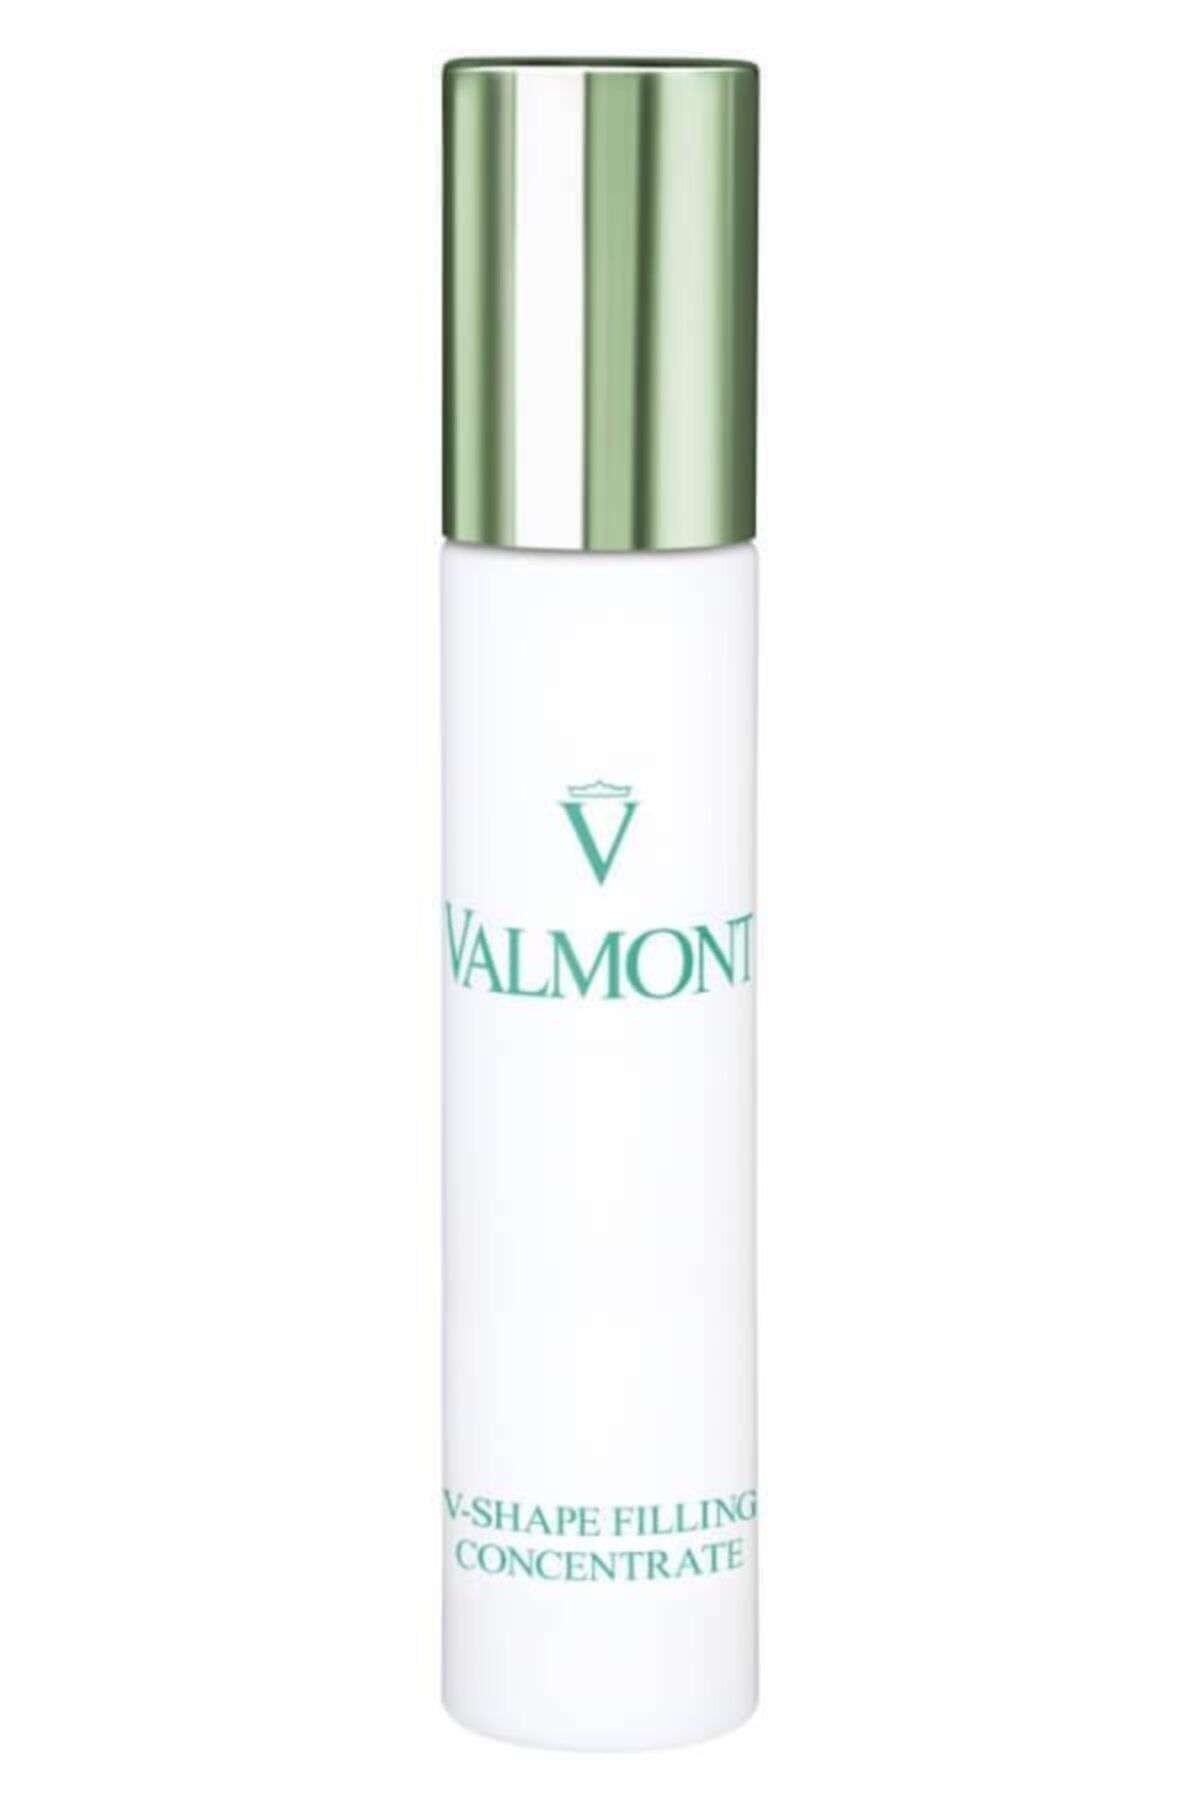 Valmont V-shape Filling Concentrate 30ml. Serum